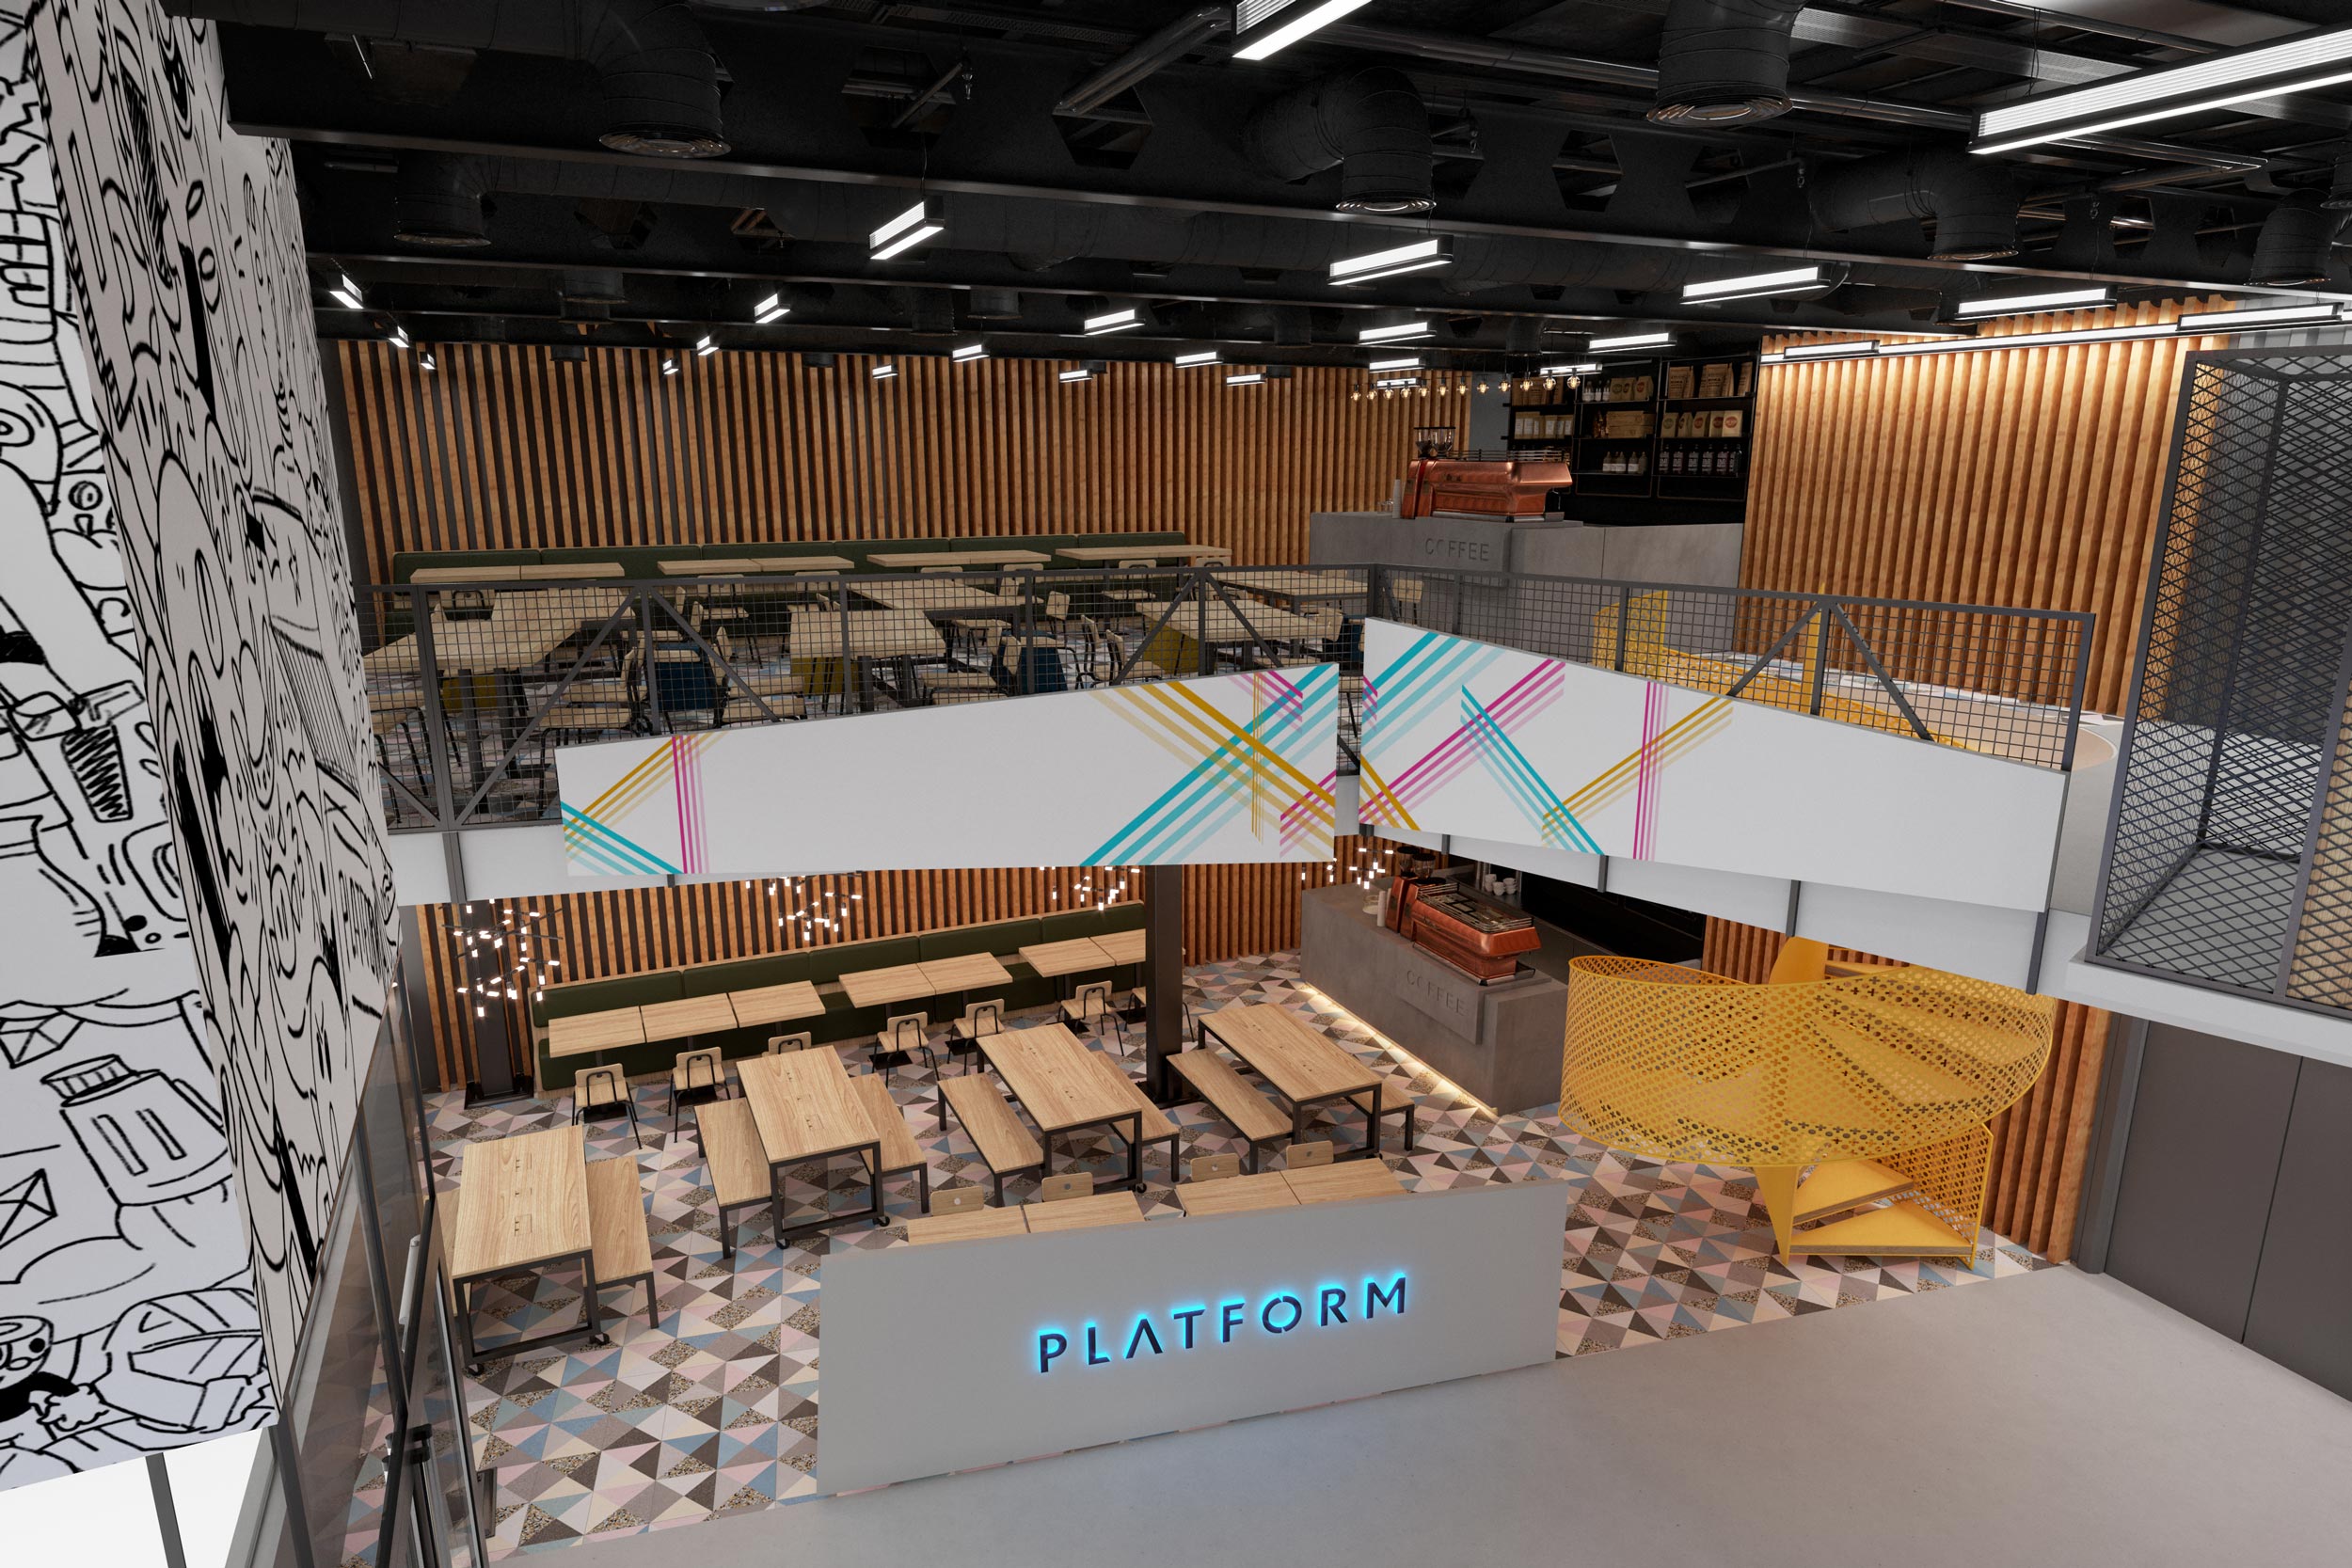 New Platform Gaming Bar, Shoreditch Commercial Retail Interior Design Visuals by Unit4 Studio, London